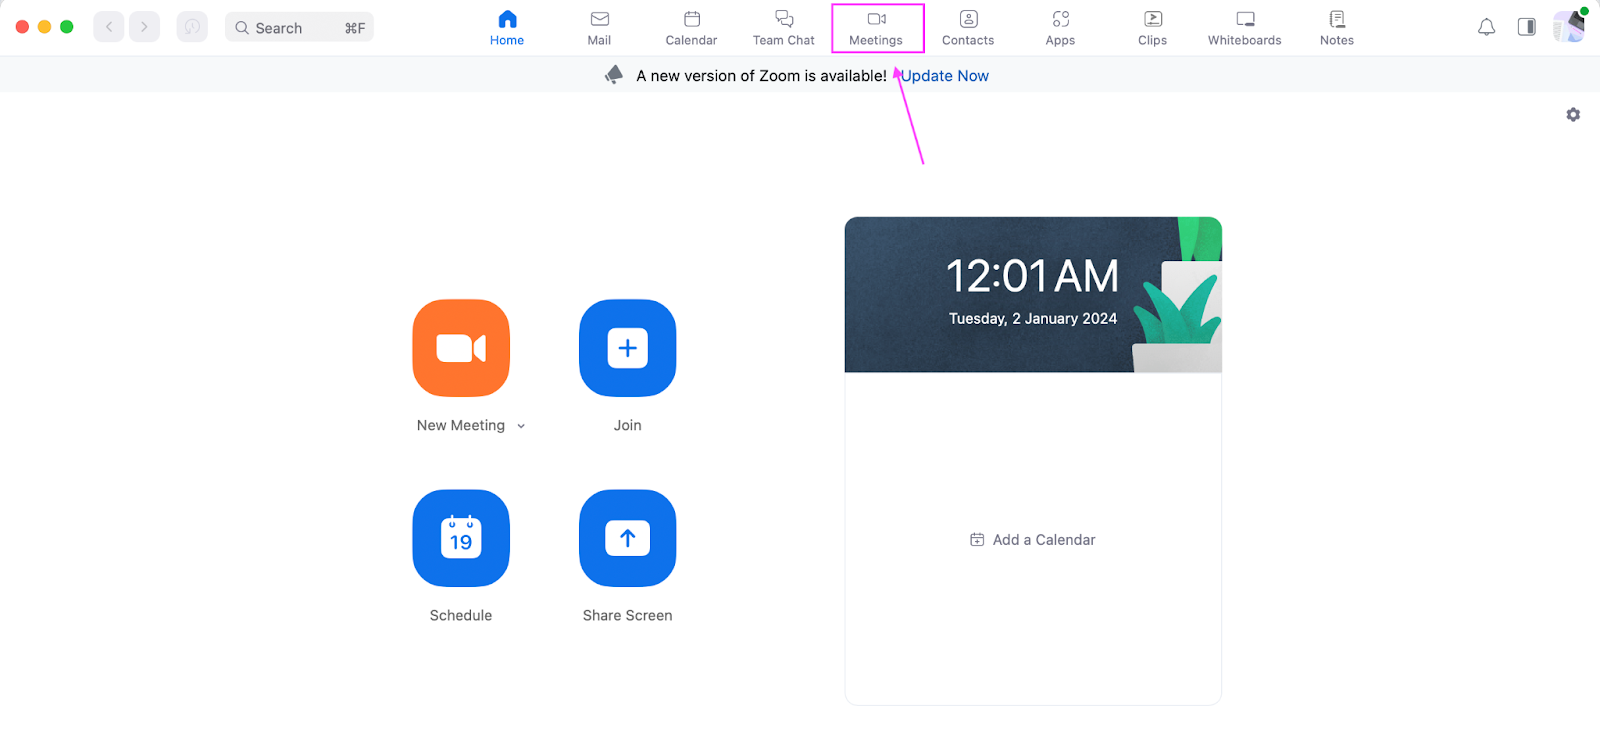 Zoom Meeting ID - How to find your Zoom Meeting ID on Zoom desktop app